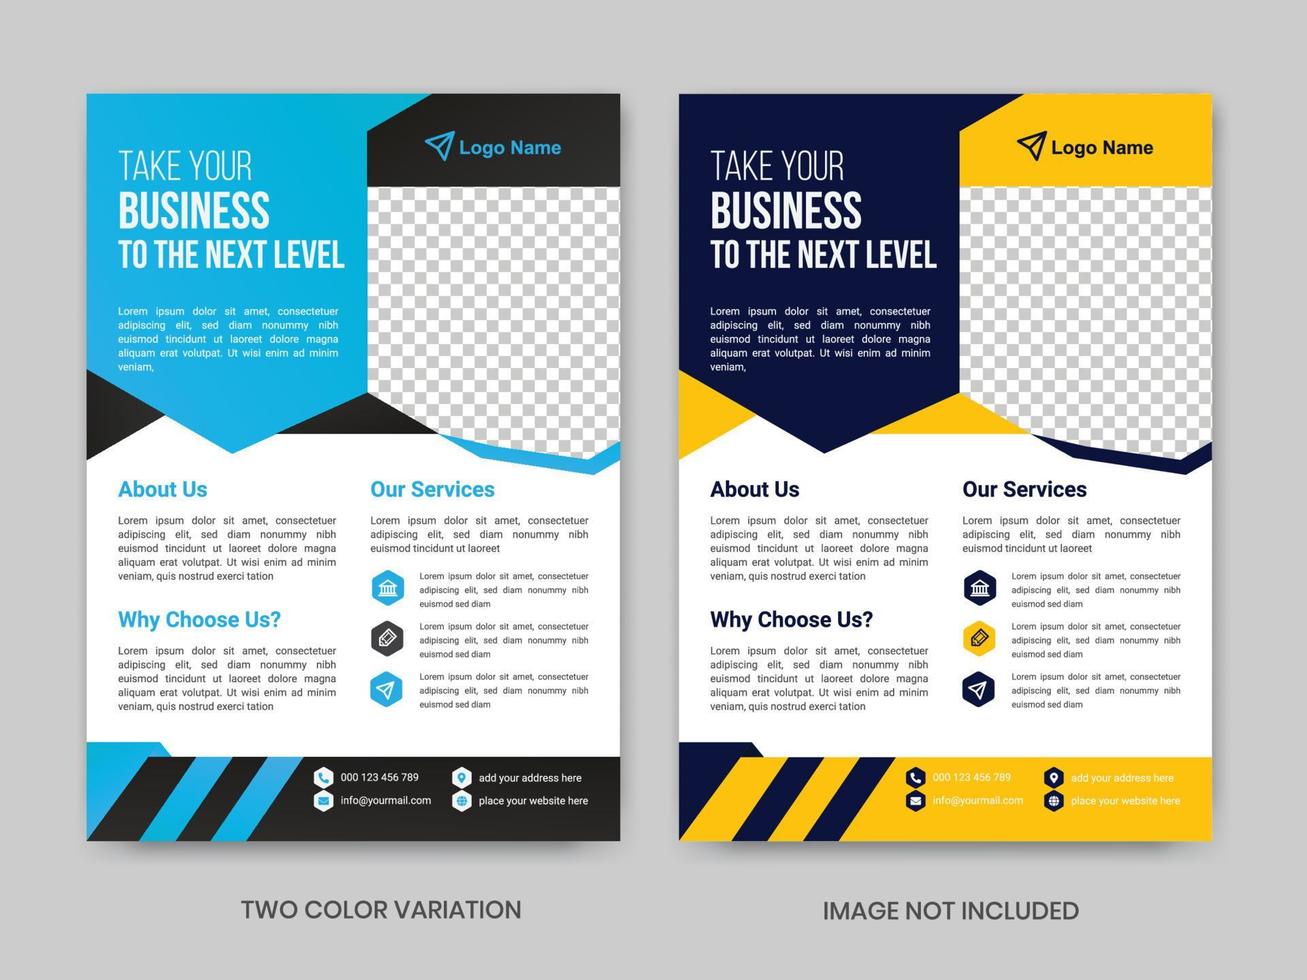 Corporate Business Flyer oder Broschüre Template-Design vektor